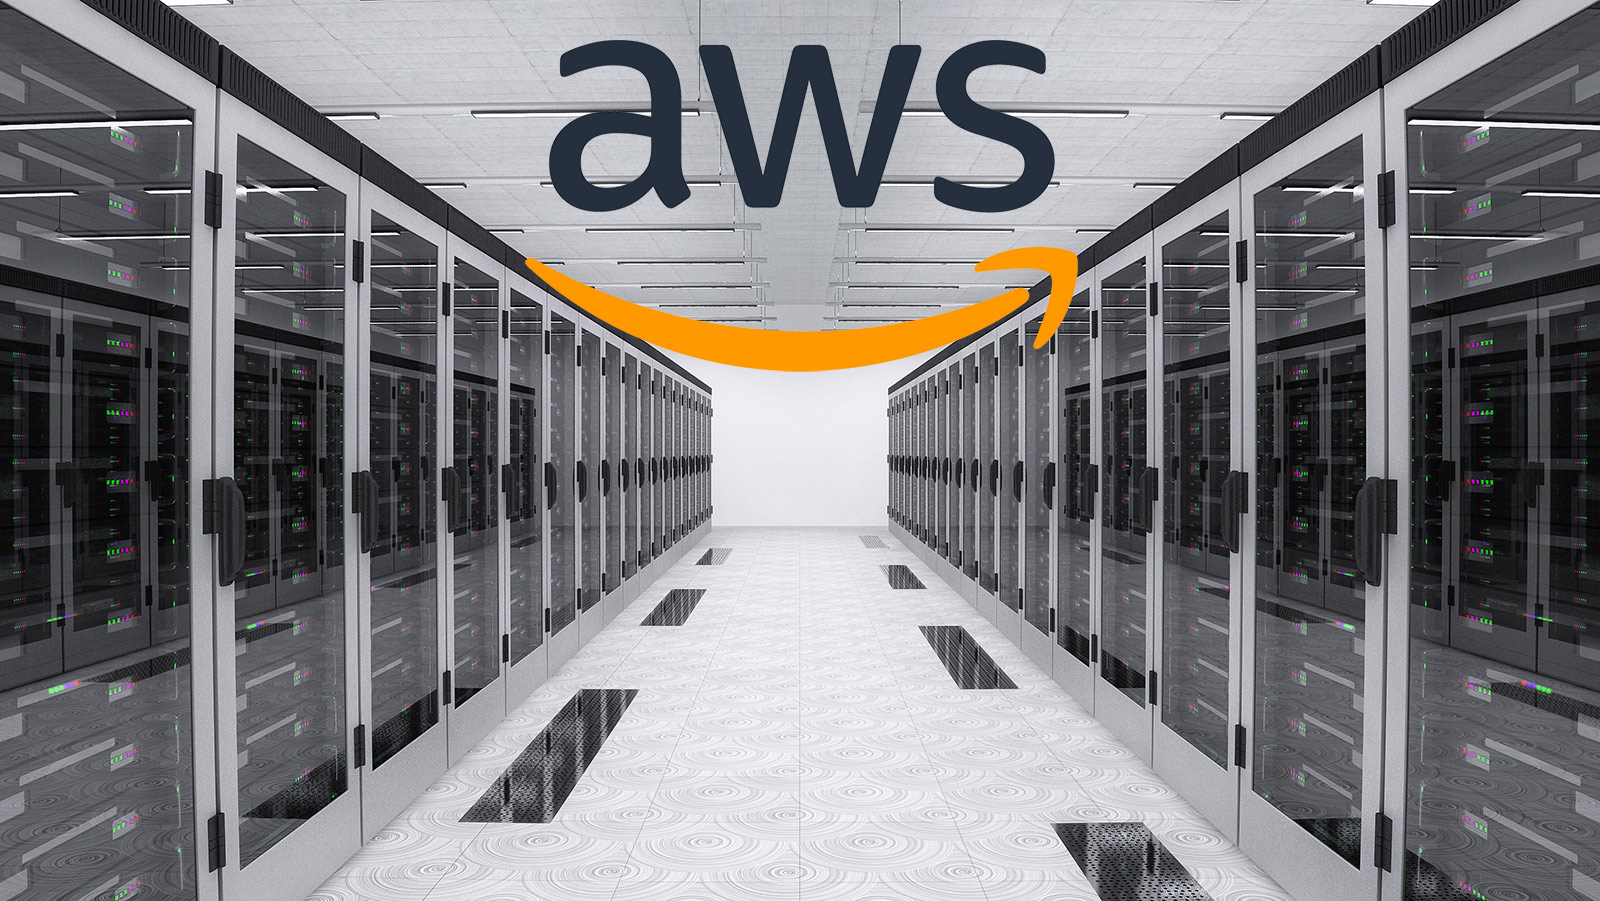 Amazon Web Services (AWS) 